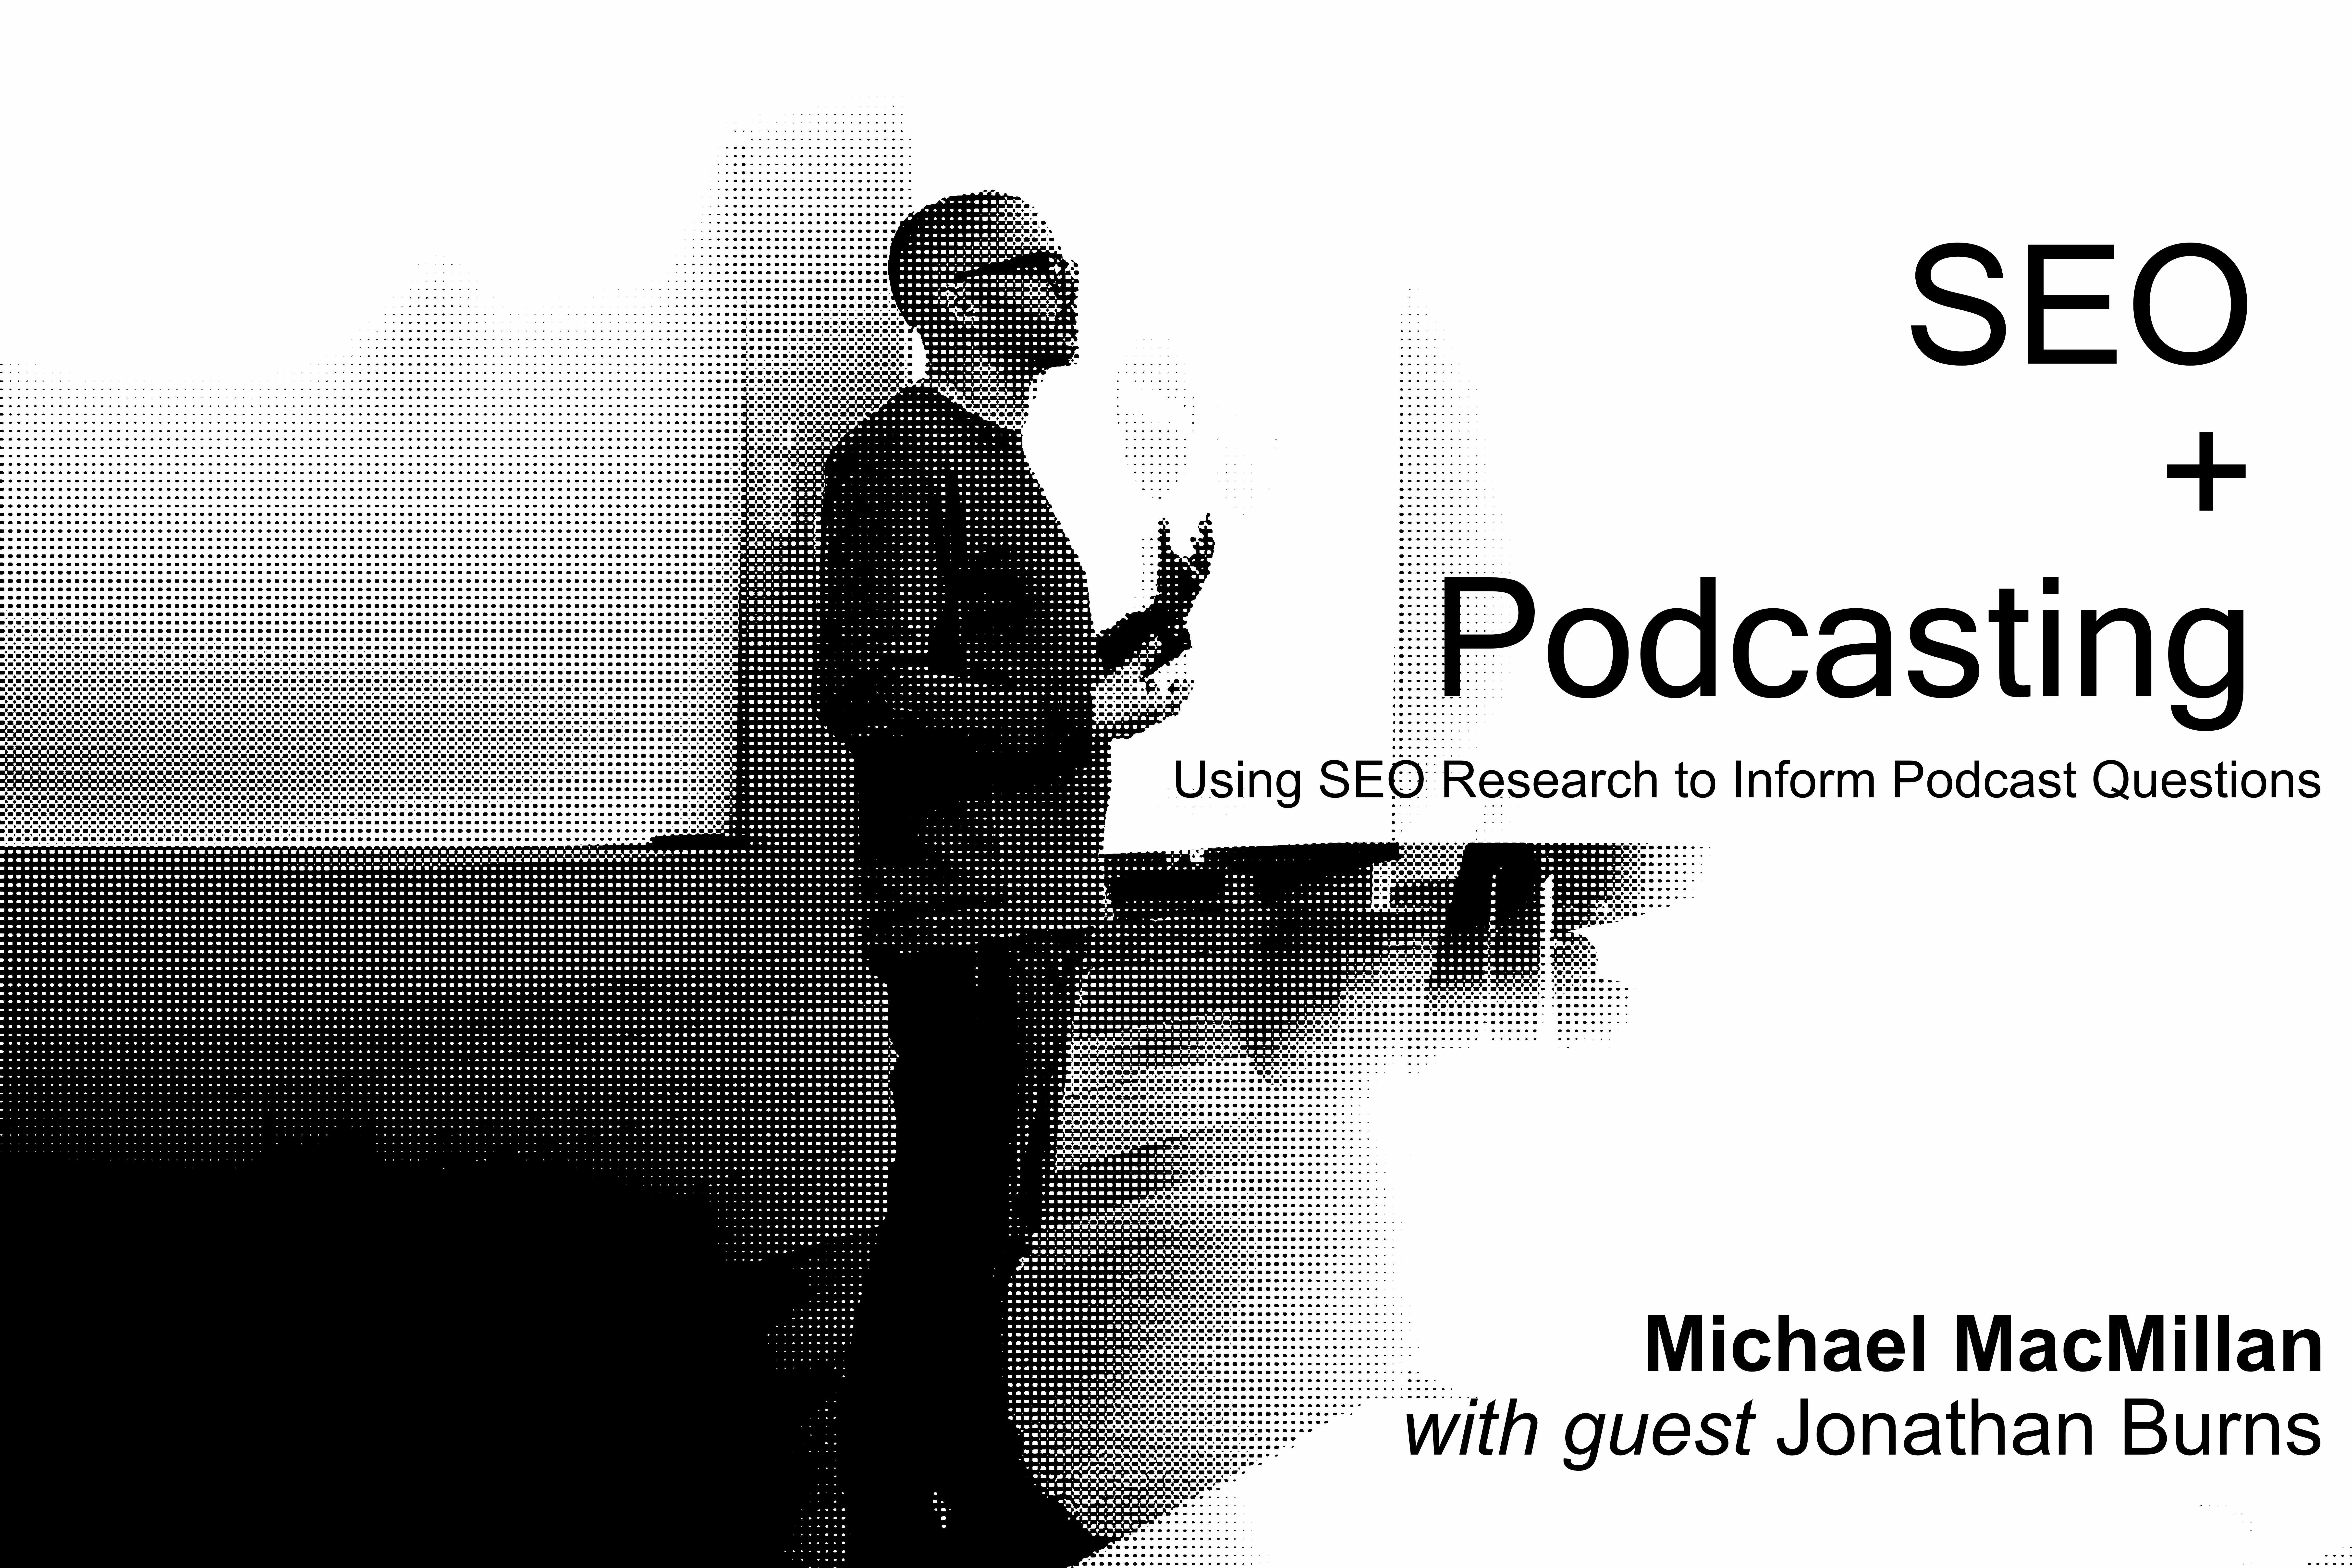 SEO + Podcasting promo image Michael MacMillan